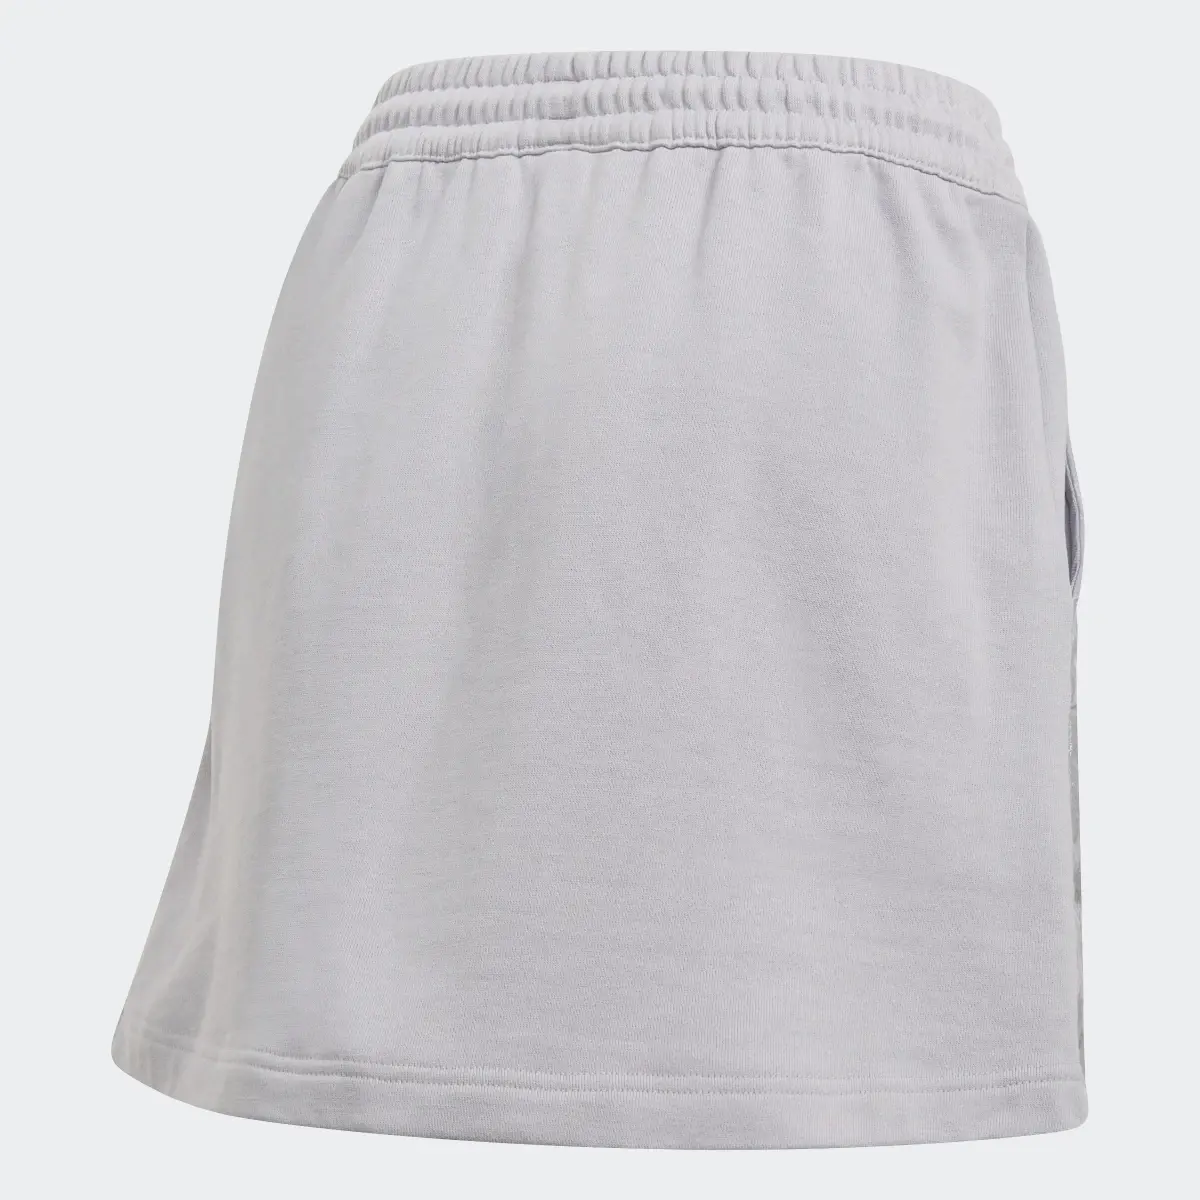 Adidas Skirt. 2